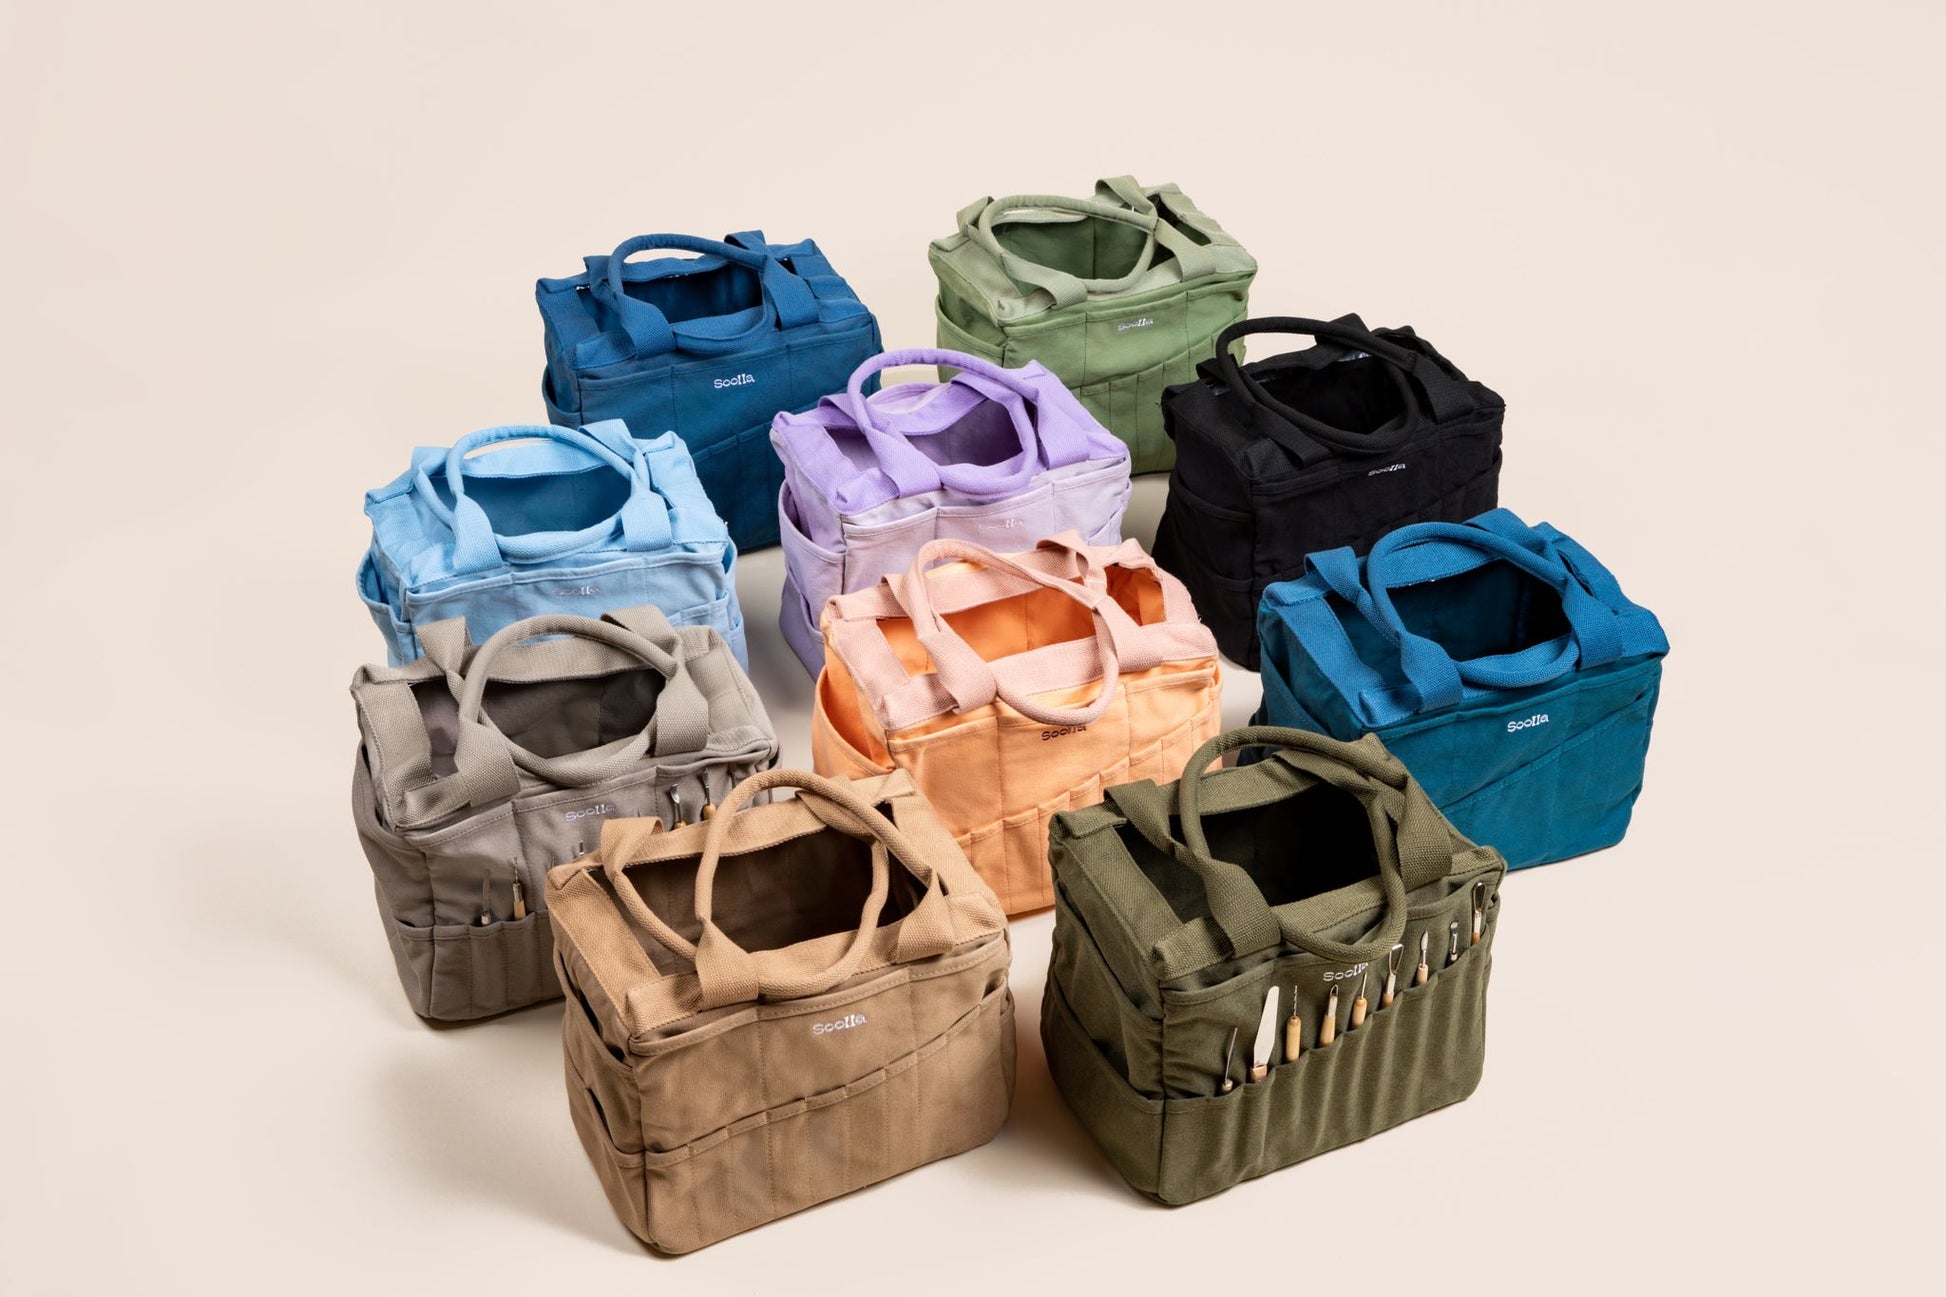 Soolla® Studio Art Supply Bag